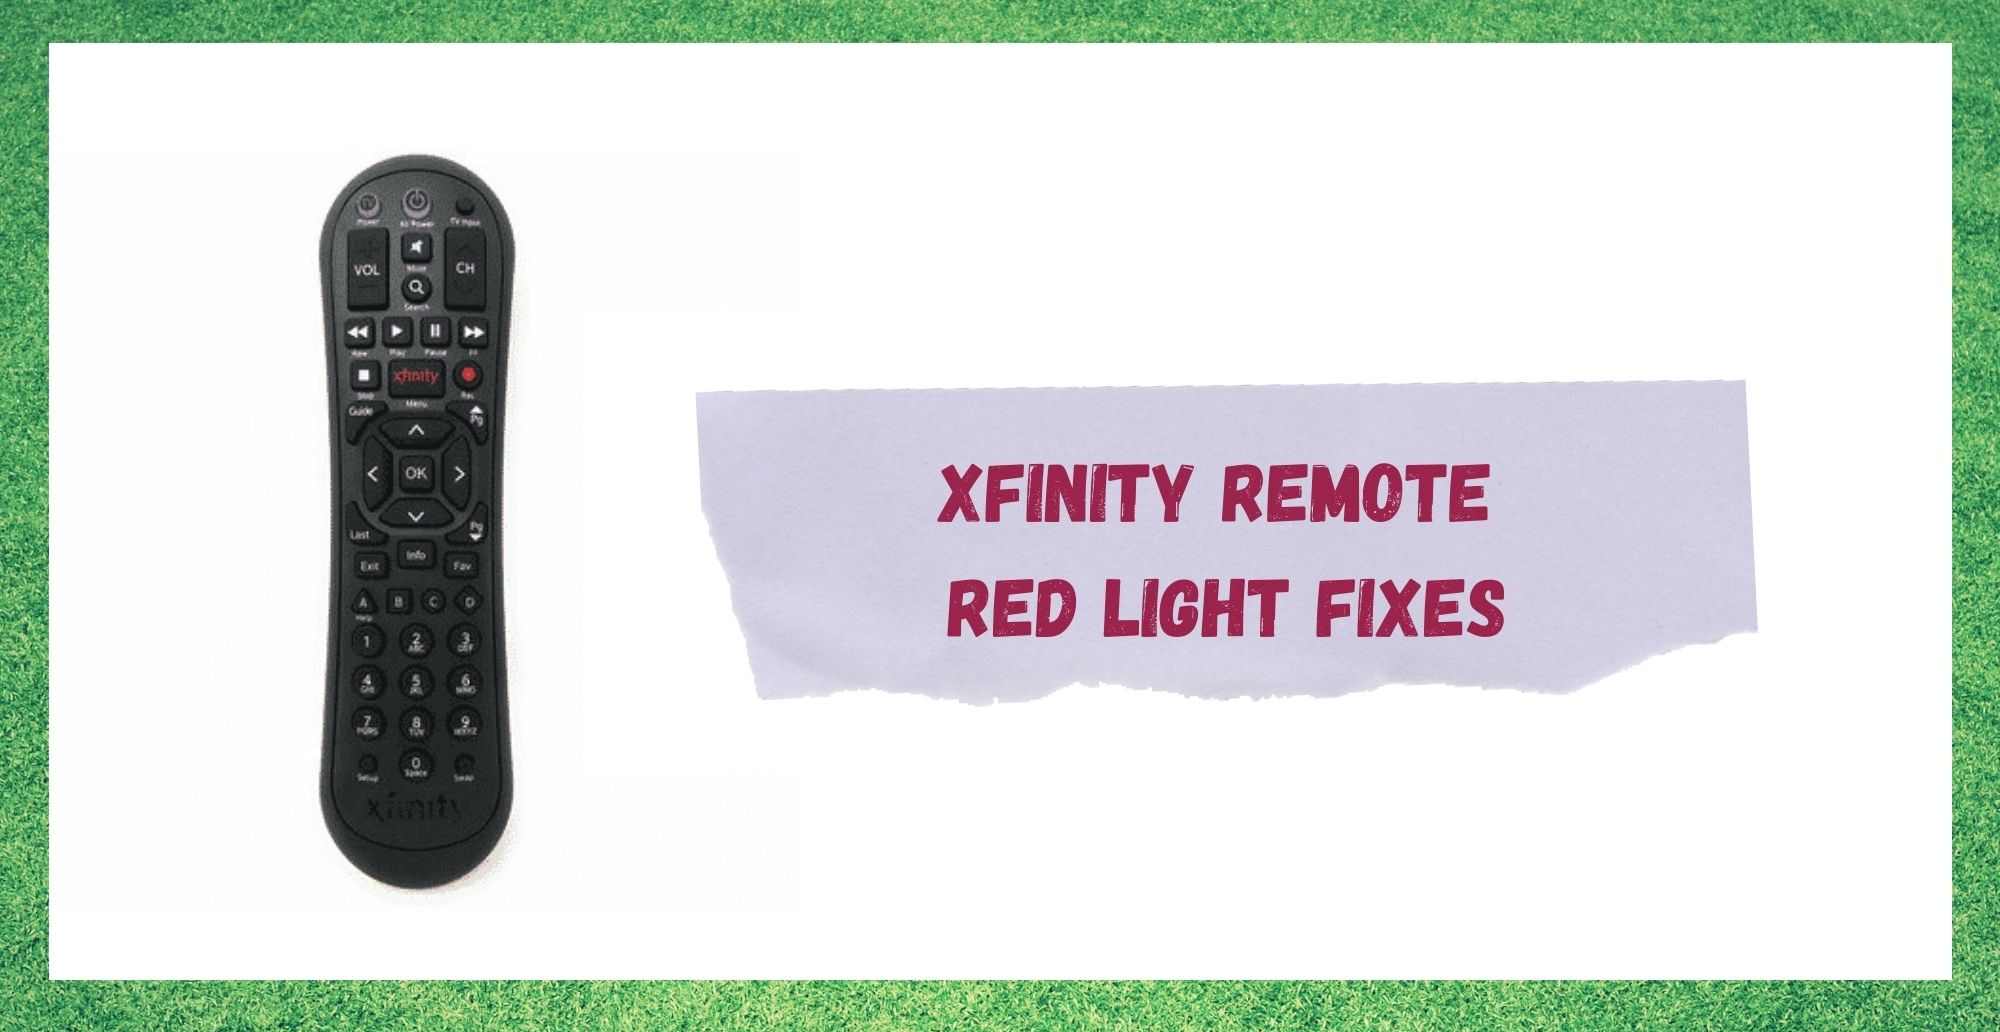 xfinity remote red light